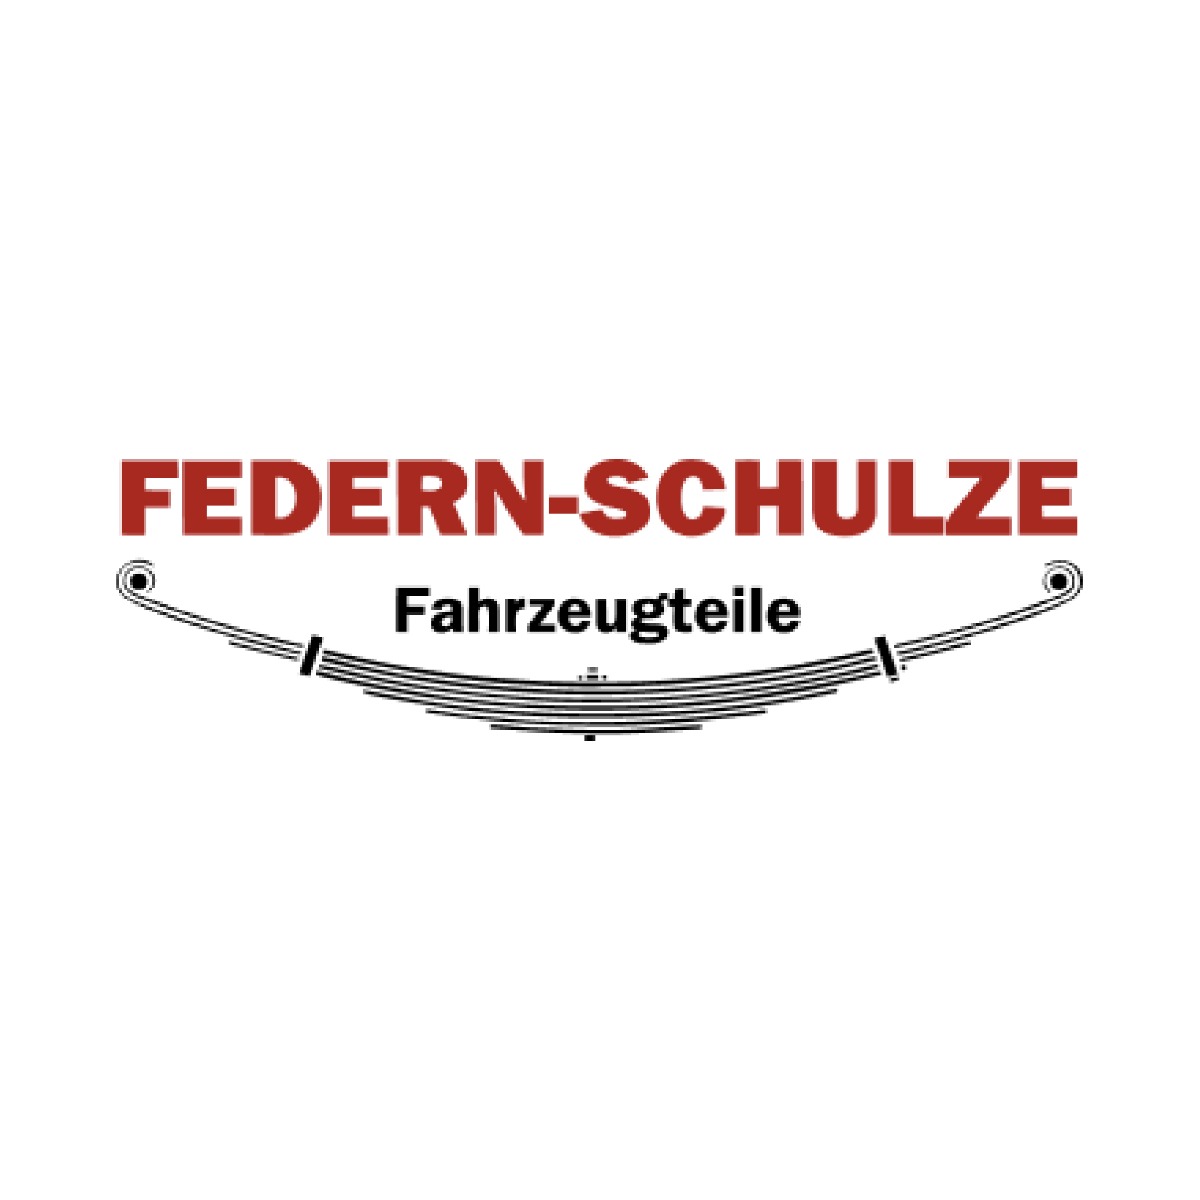 Federn-Schulze